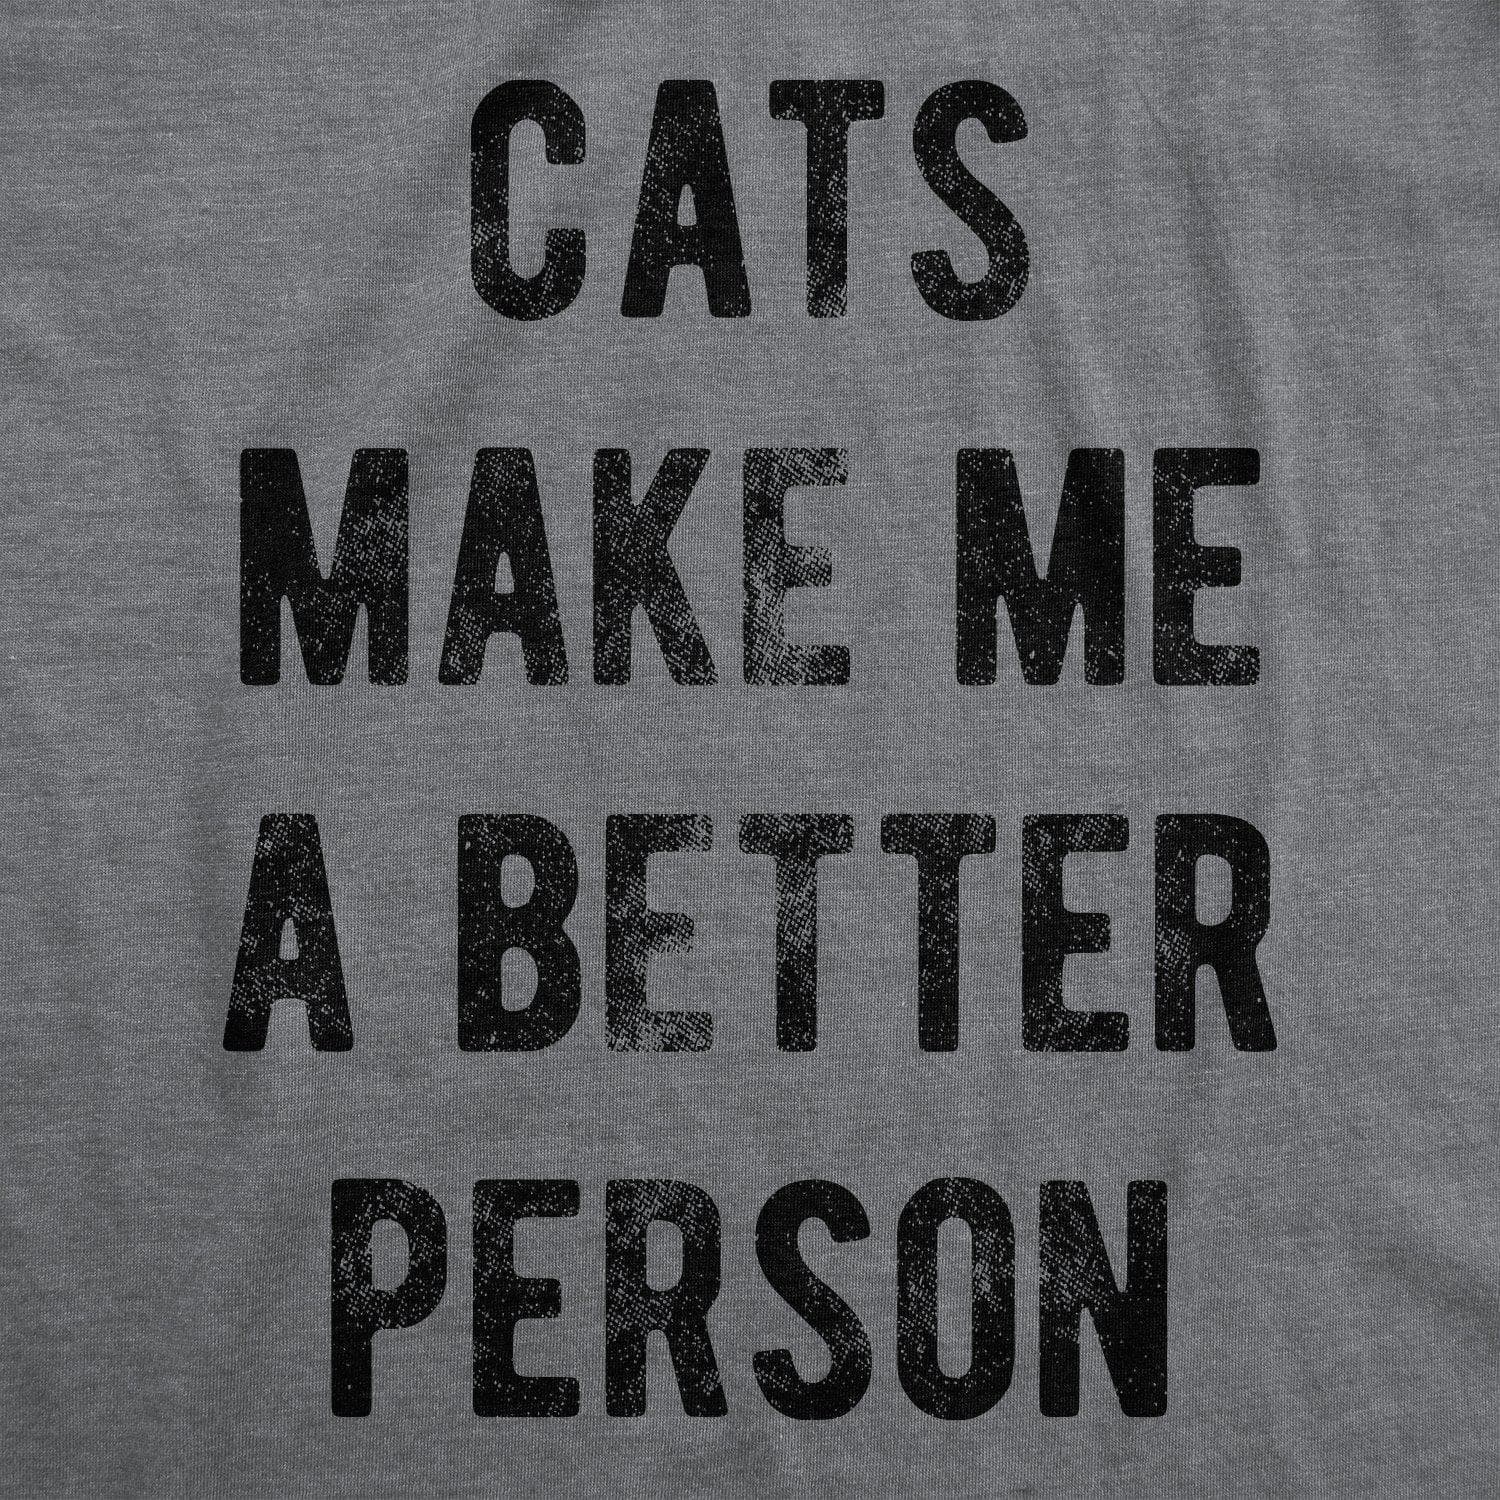 Cats Make Me A Better Person Women's Tshirt - Crazy Dog T-Shirts